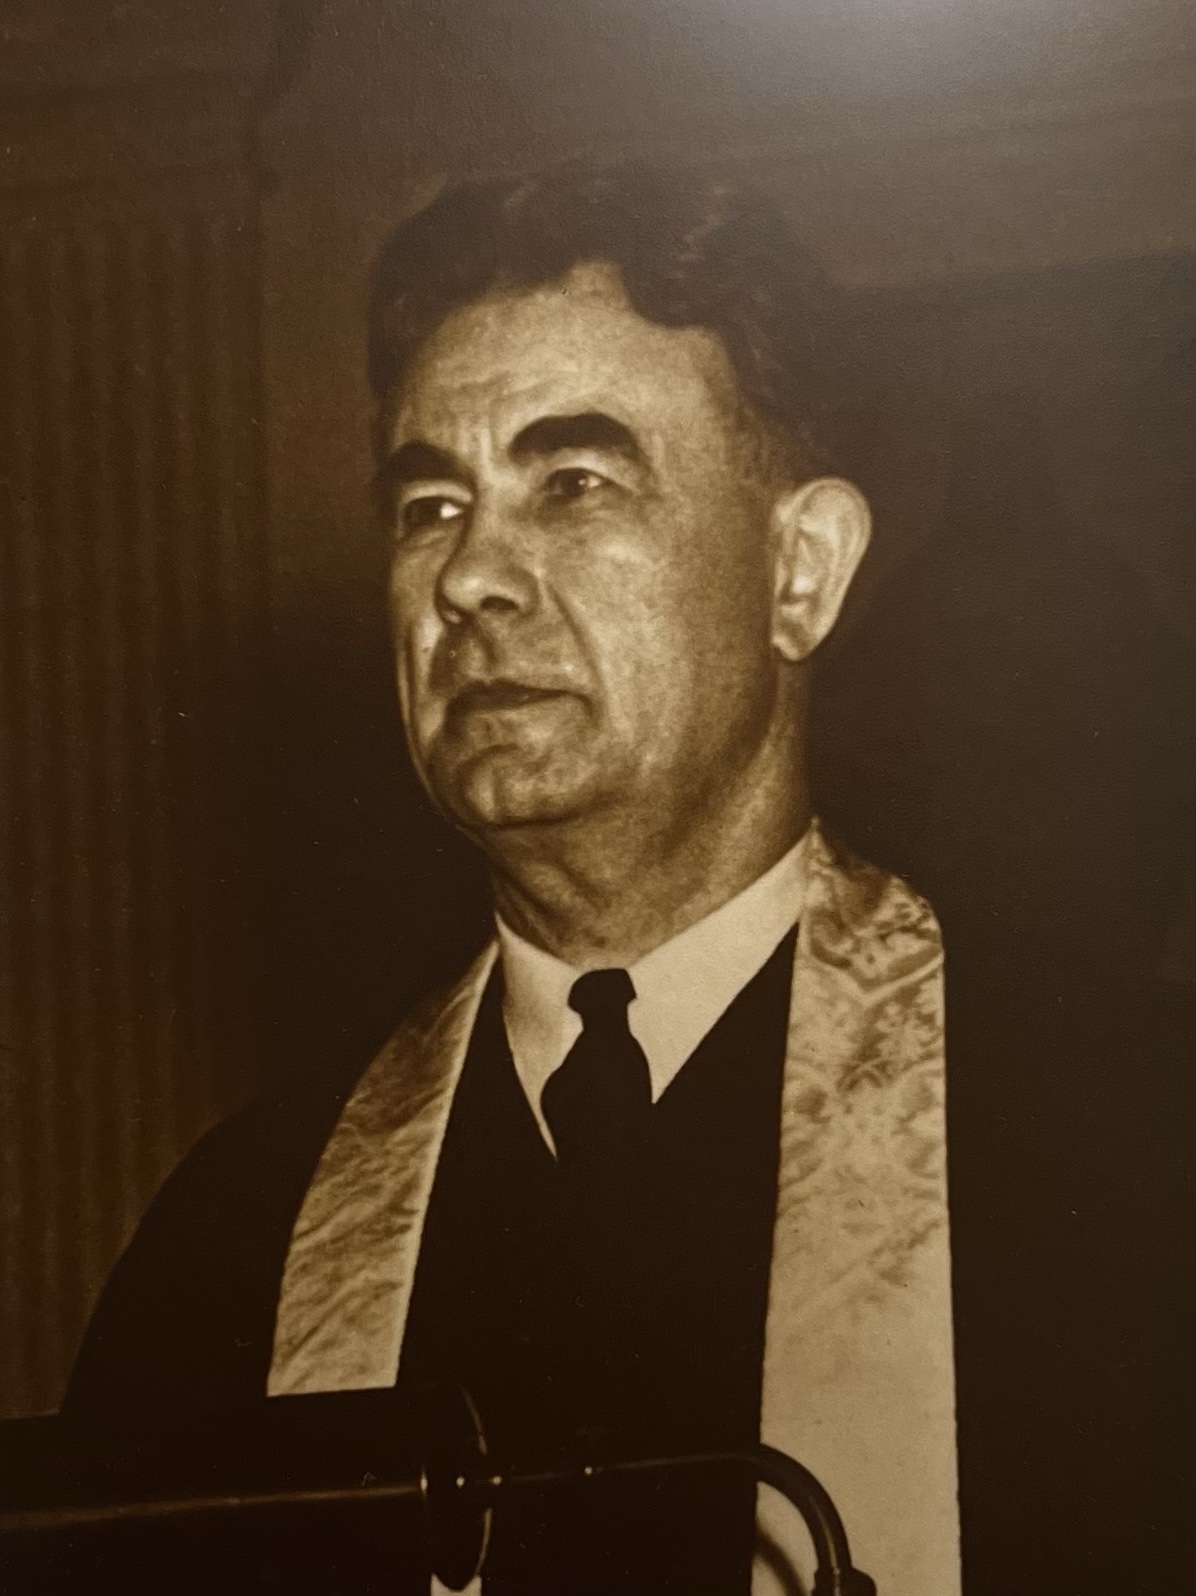 The Rev. H. Walter Webner